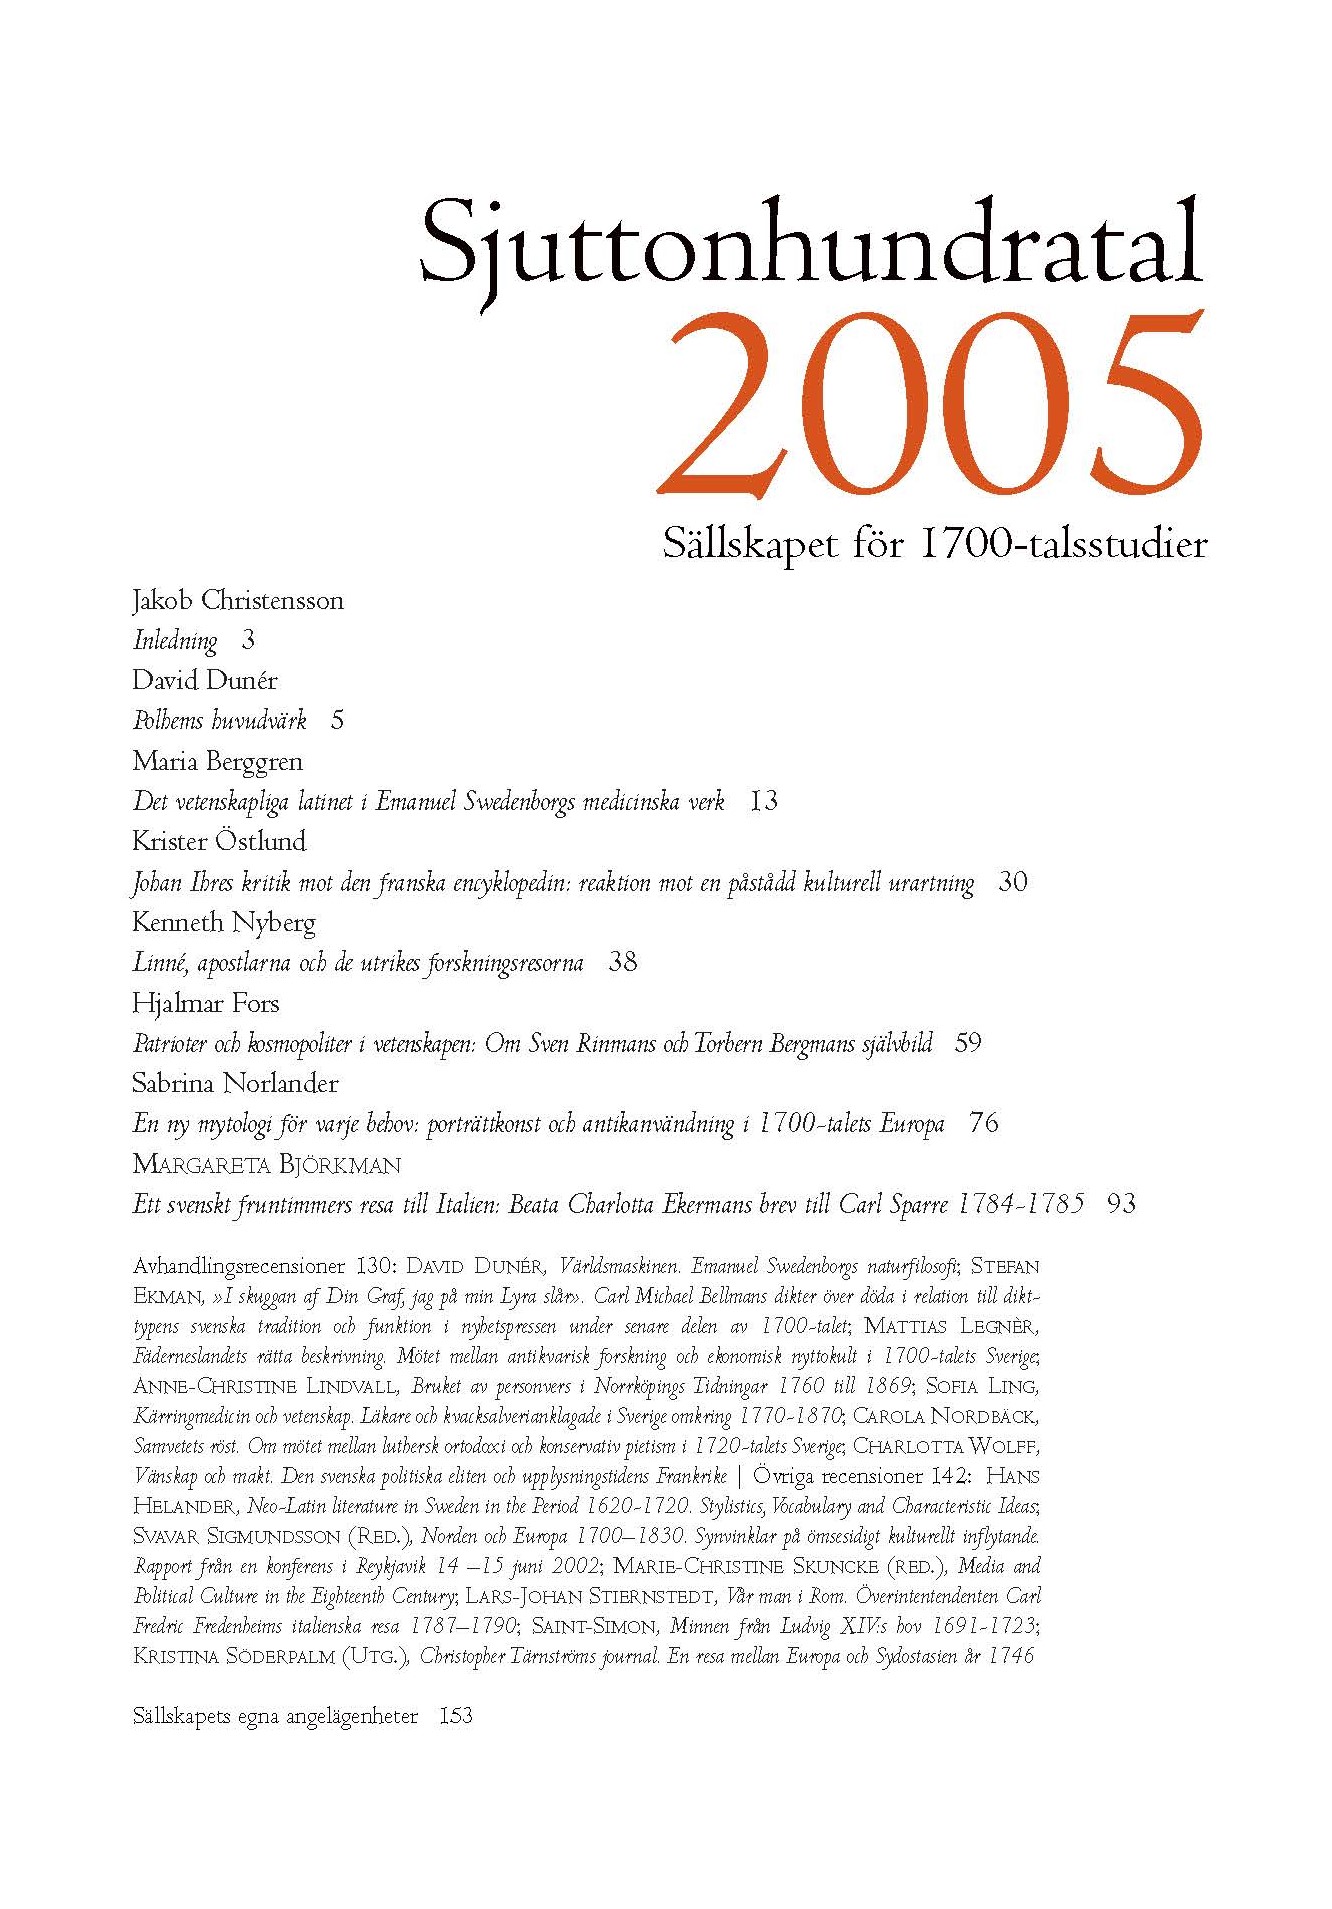 Frontcover of Sjuttonhundratal 2005.